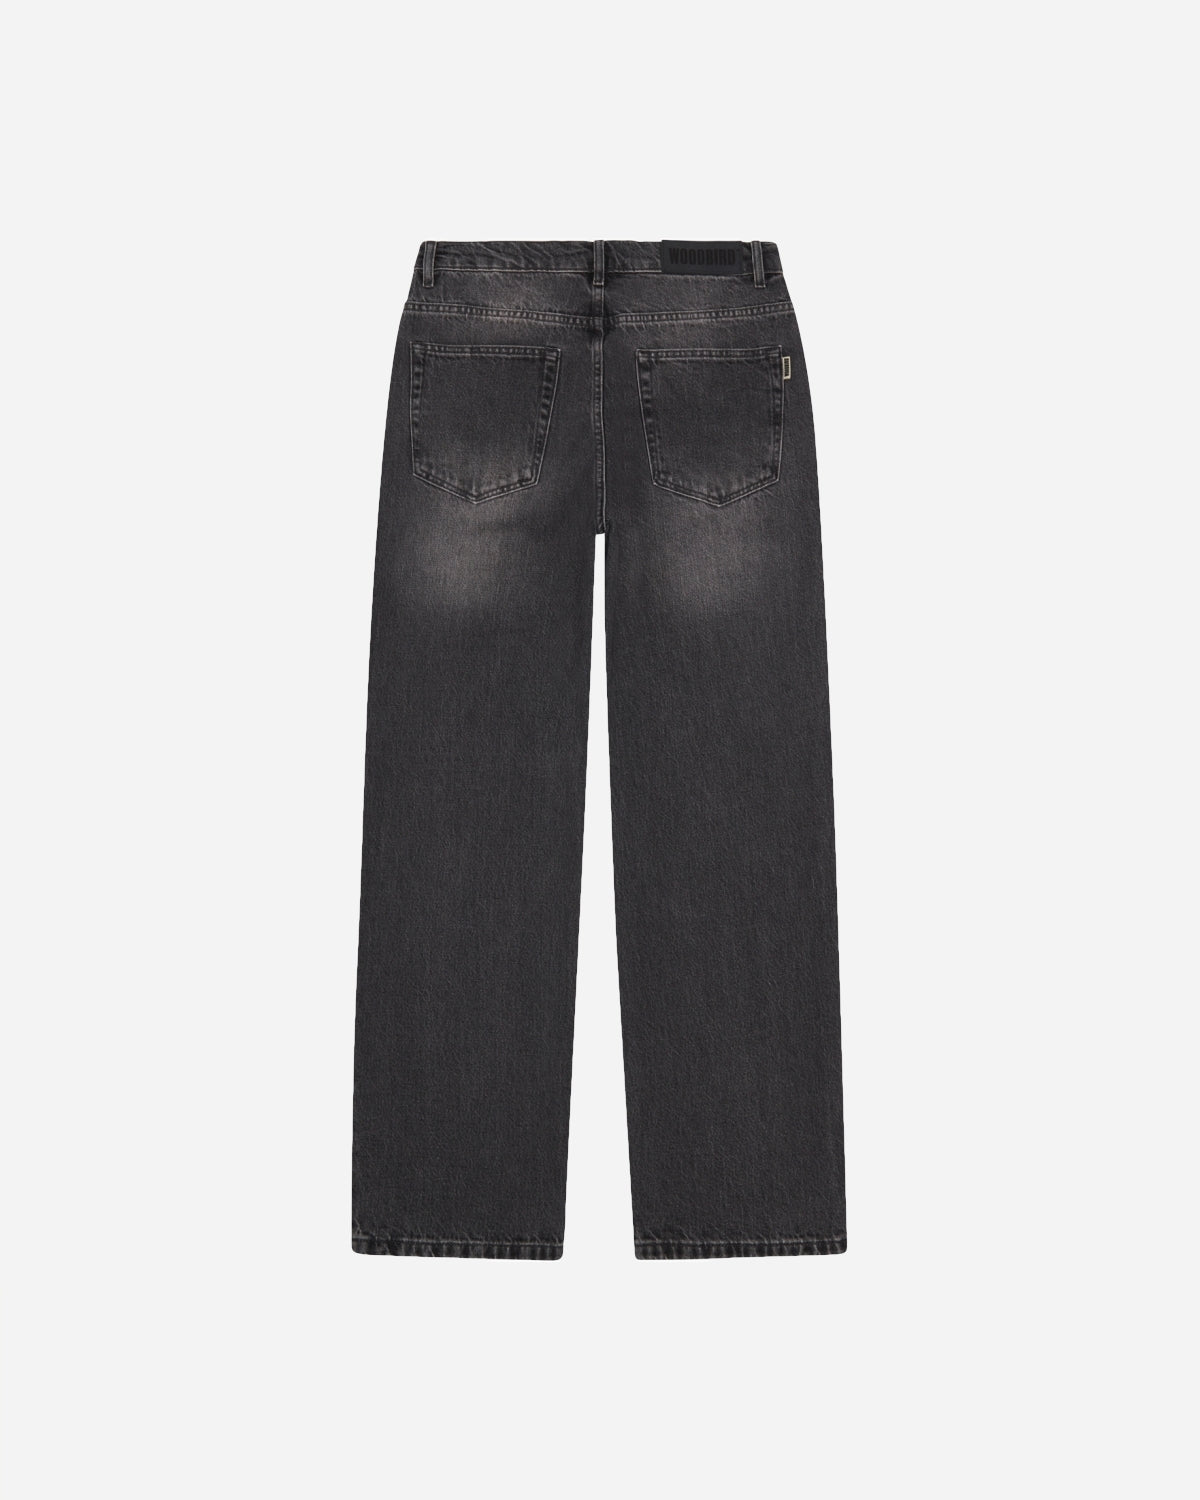 Rami Eclipse Jeans - Grey / Black